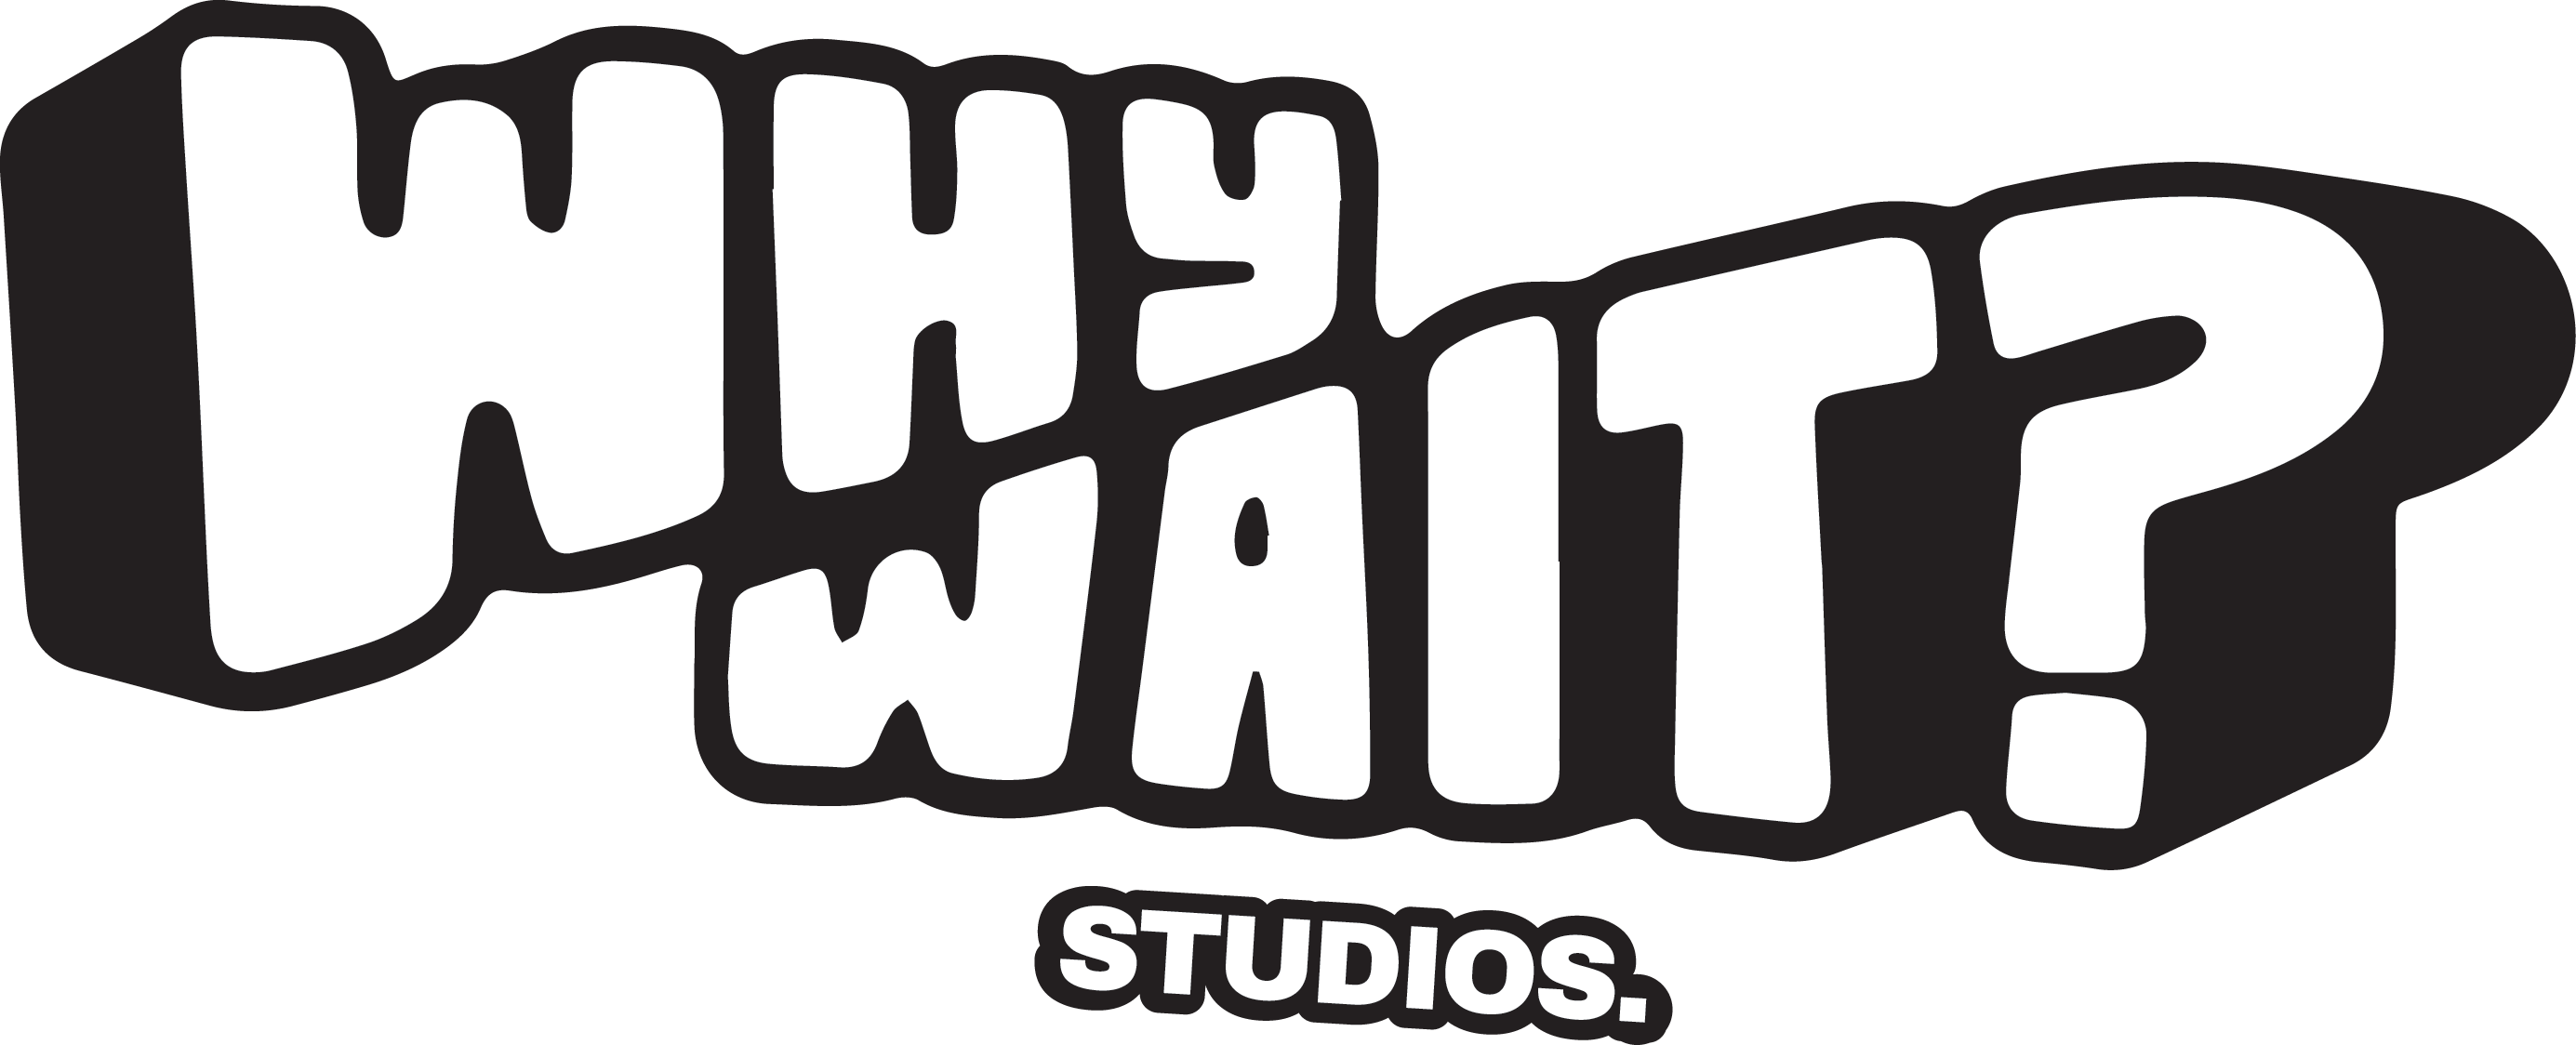 Why Wait Studios